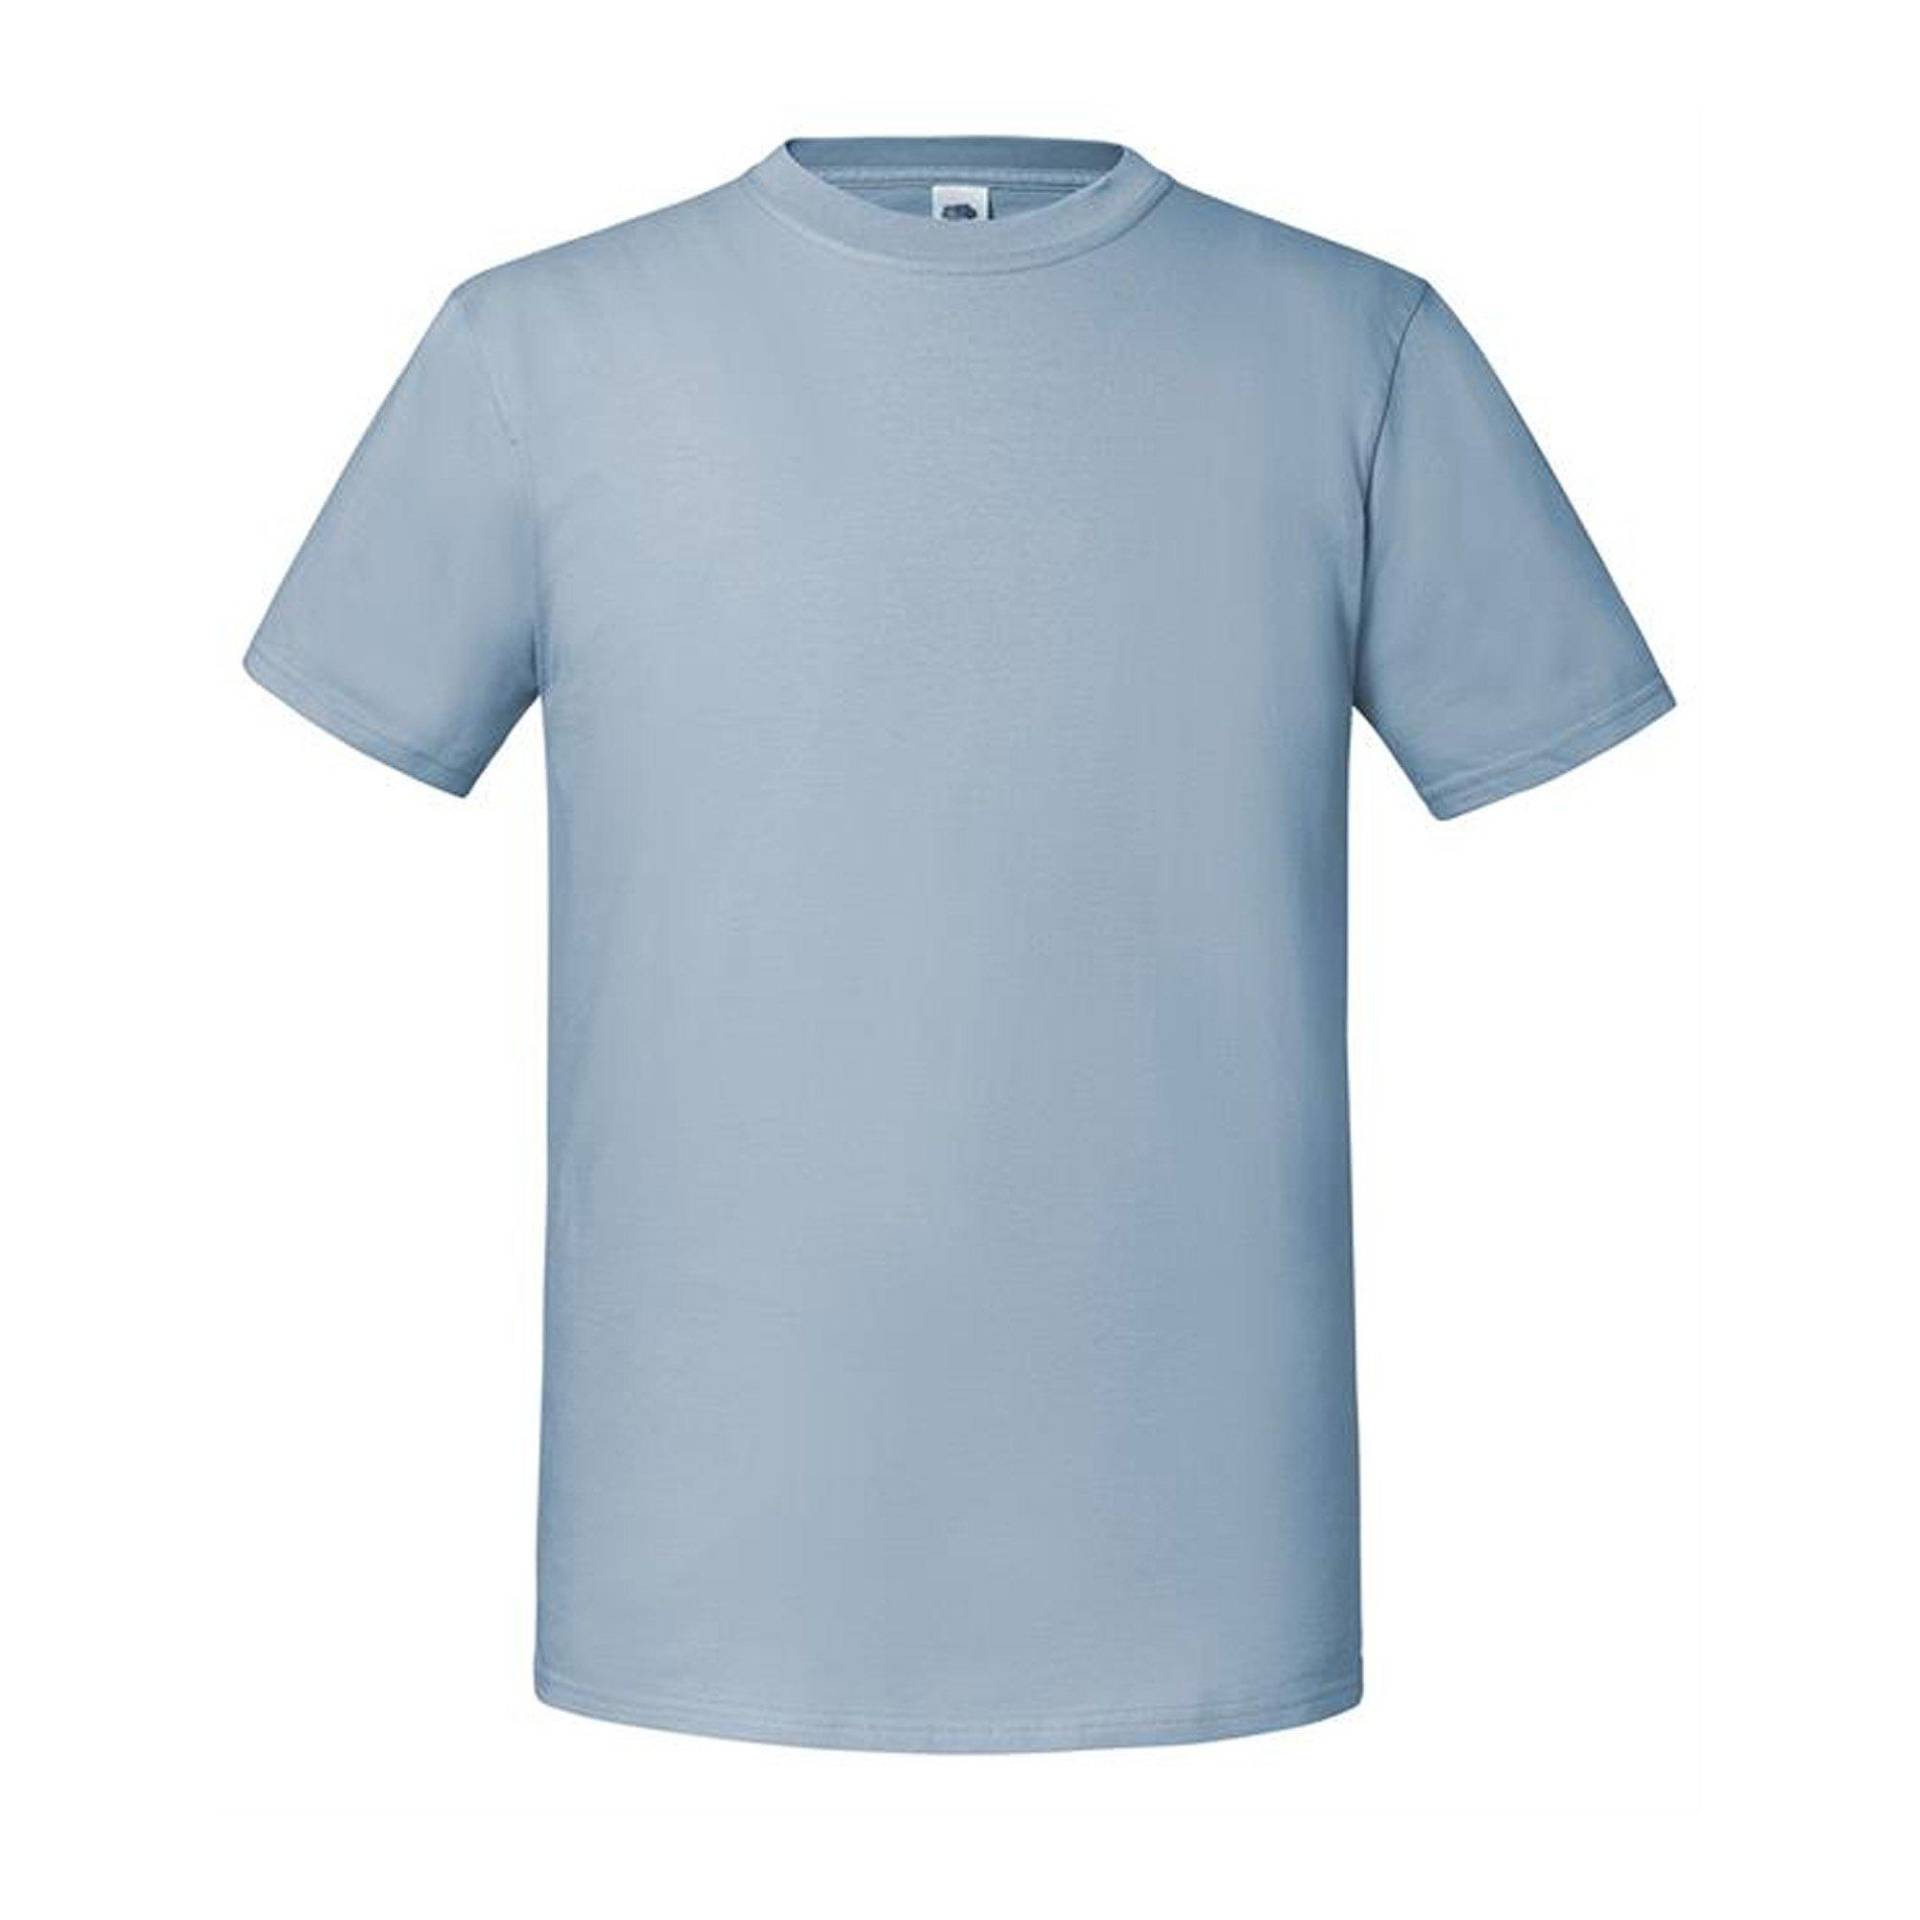 Premium Tshirt Damen Blau XL von Fruit of the Loom